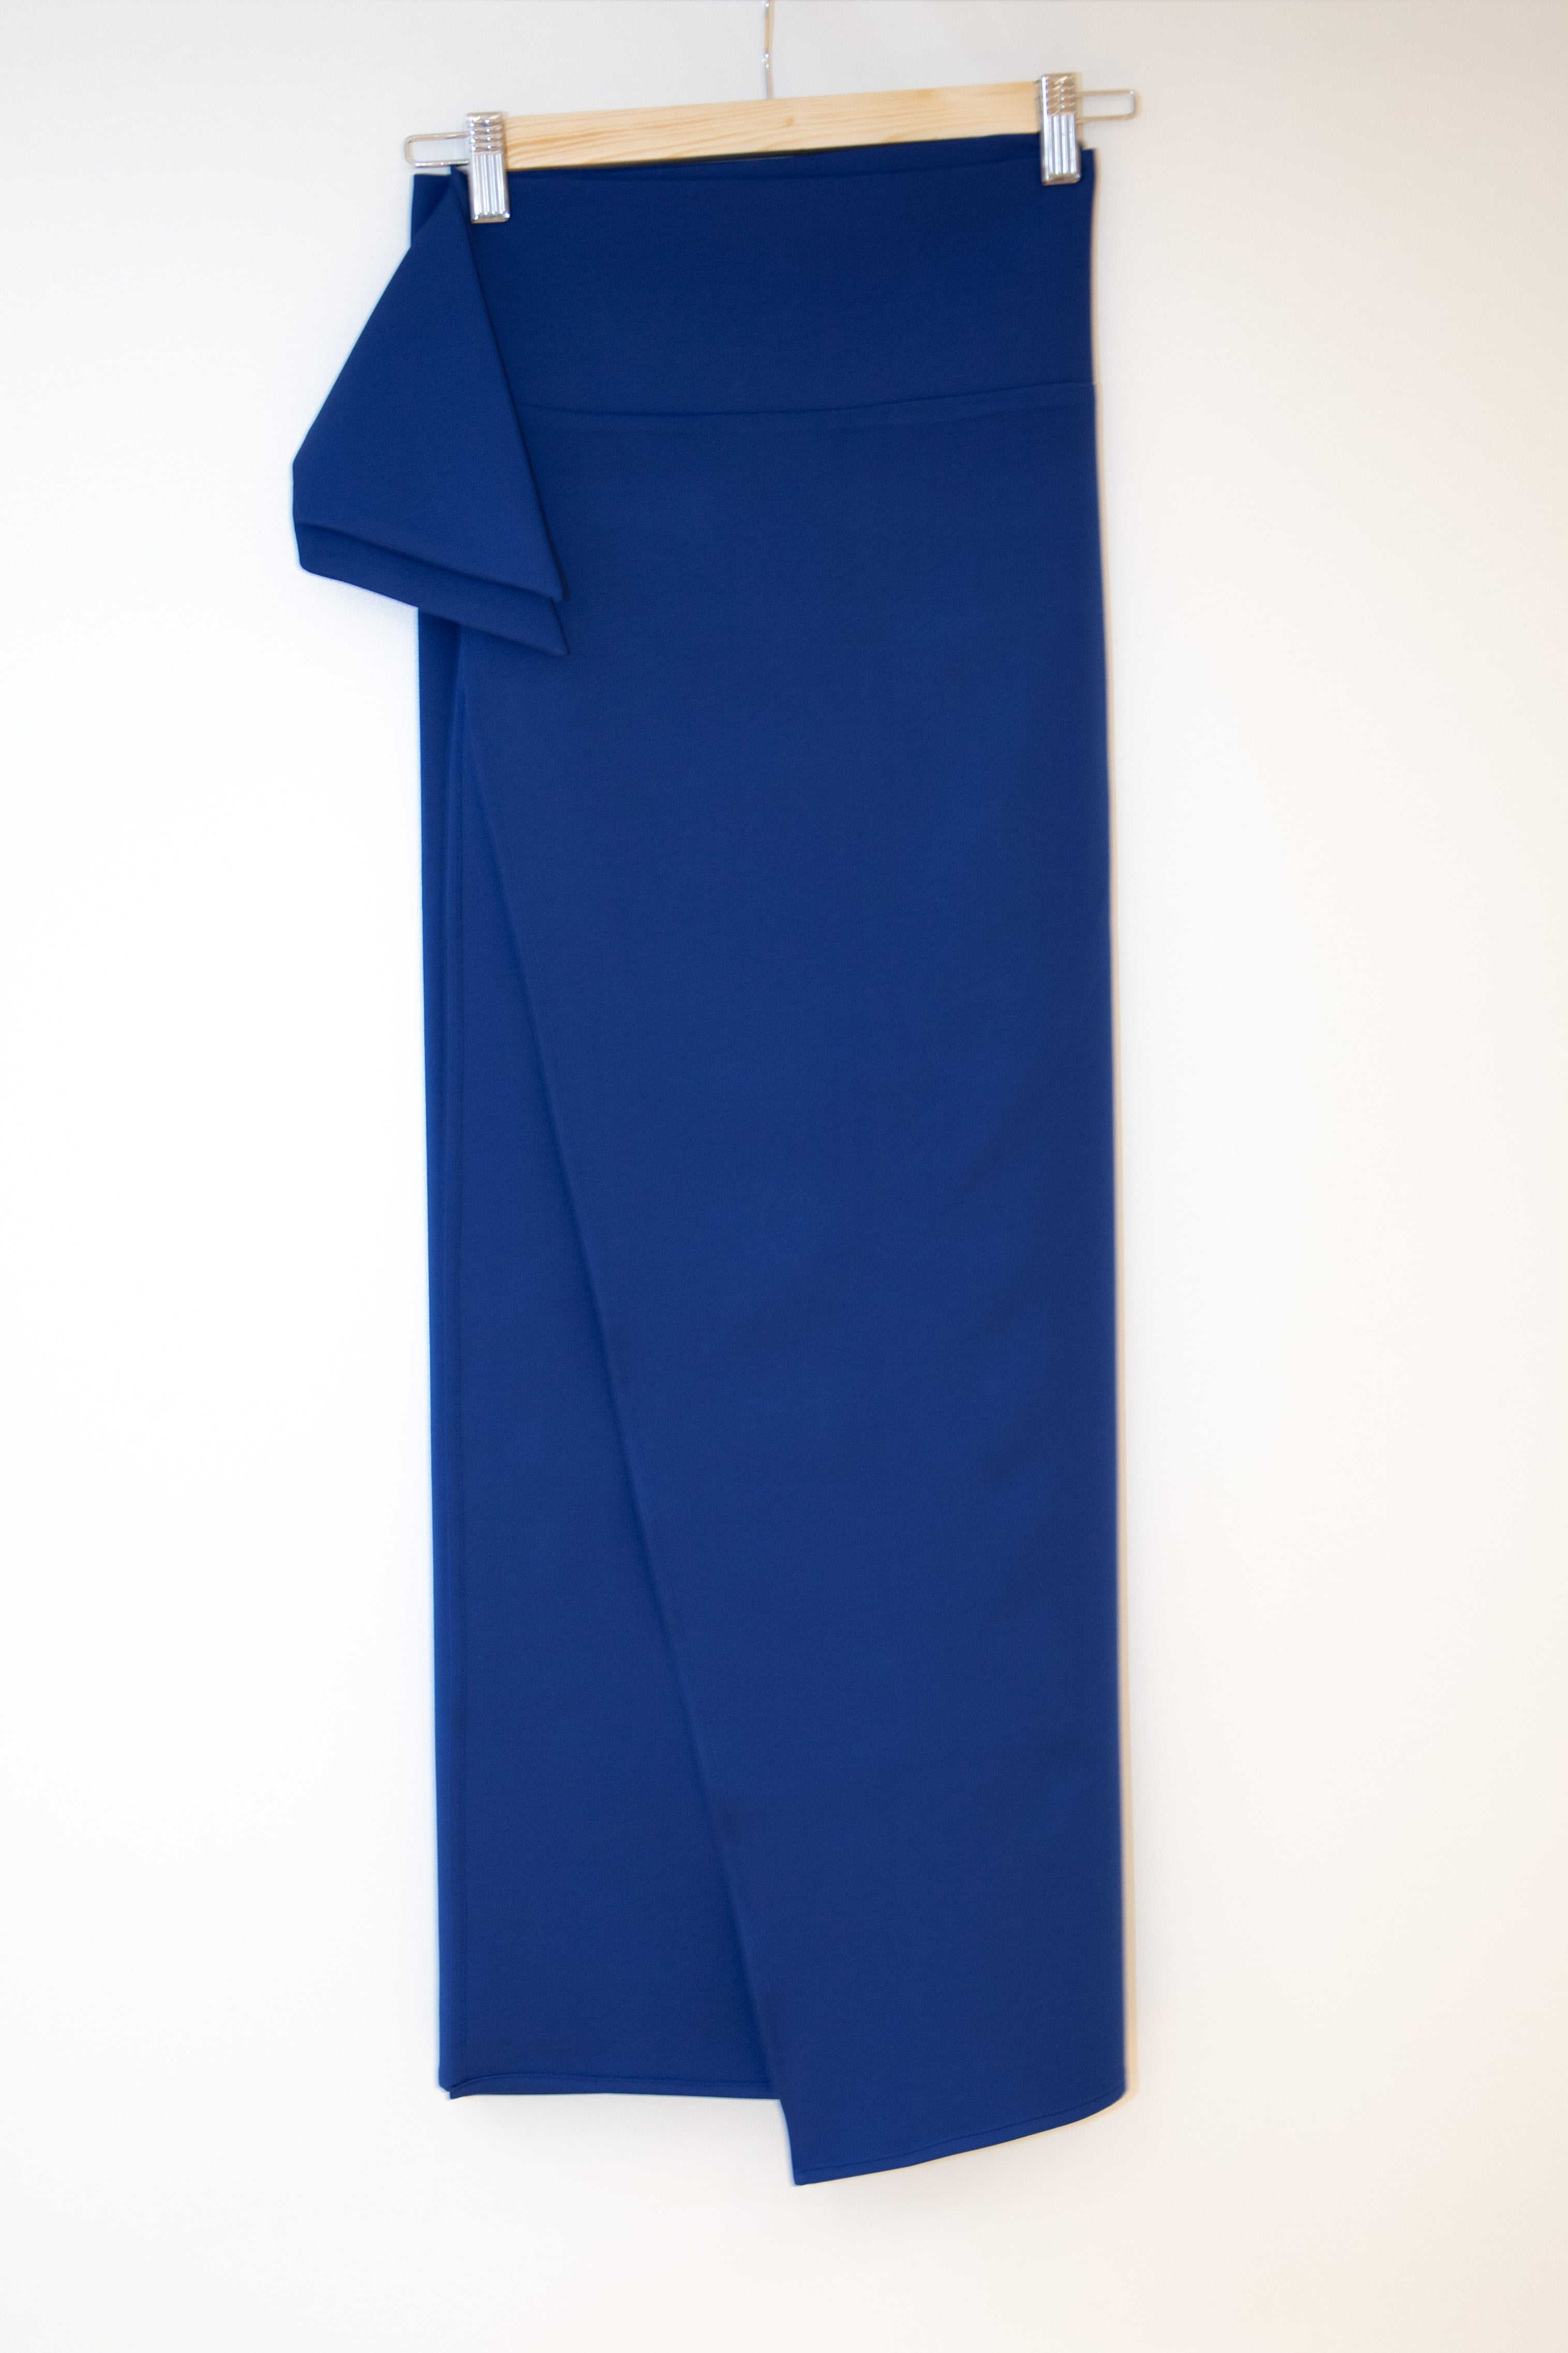 Cobalt blue wrap skirt on a wooden clip hanger on a white background